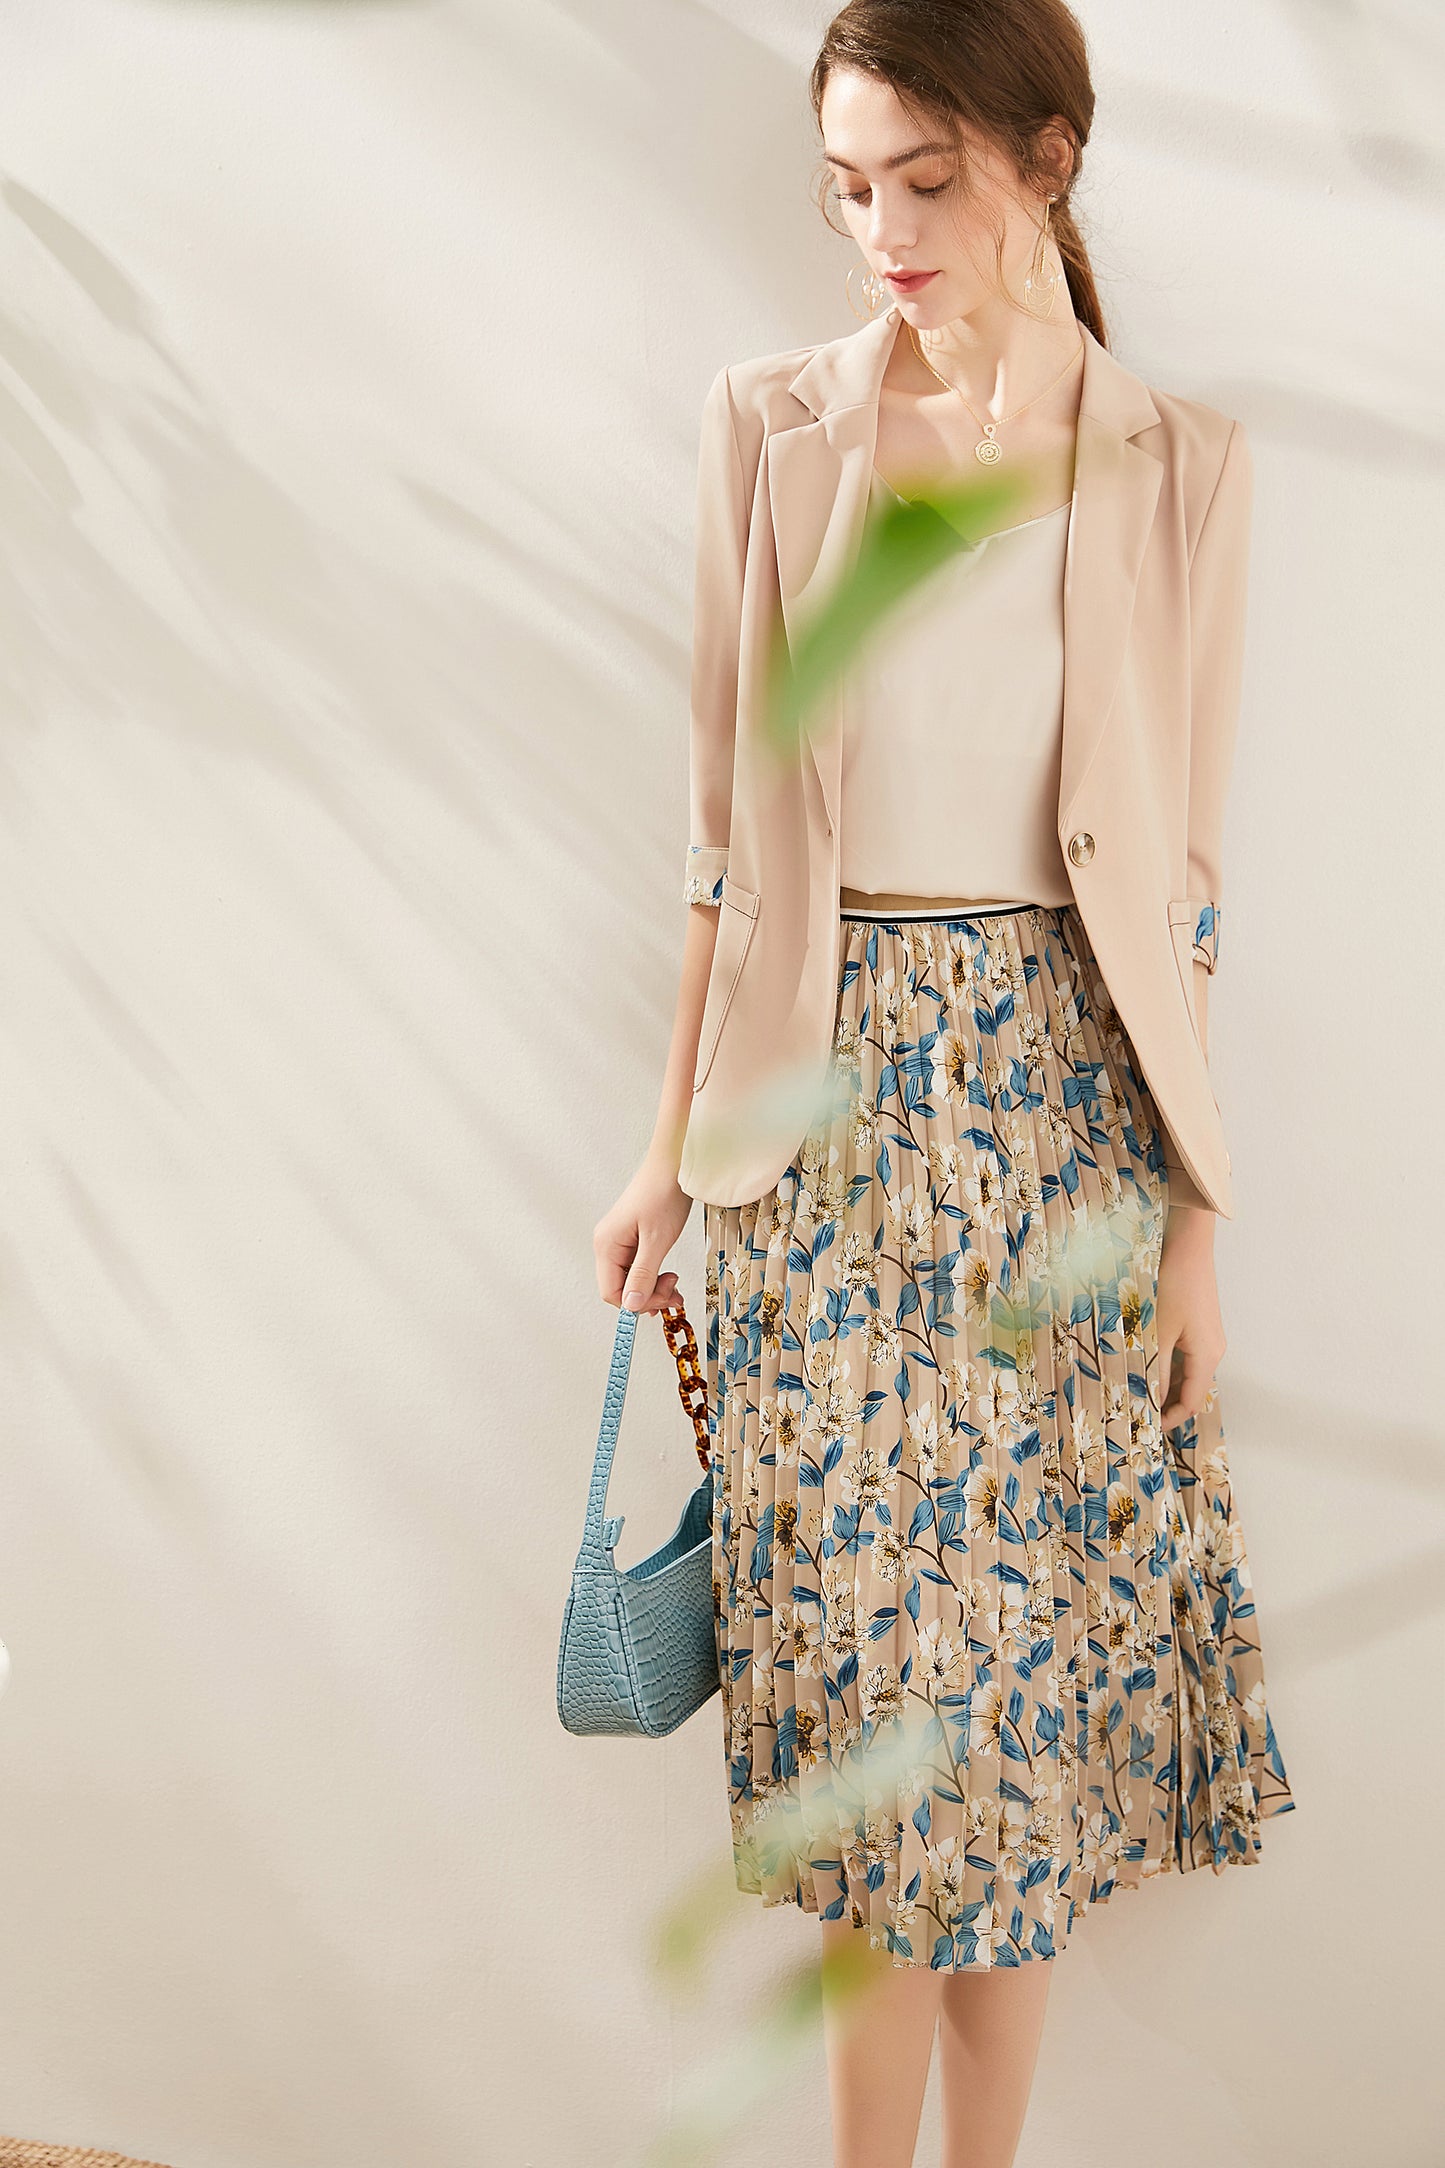 Cinzia Pleated floral skirt